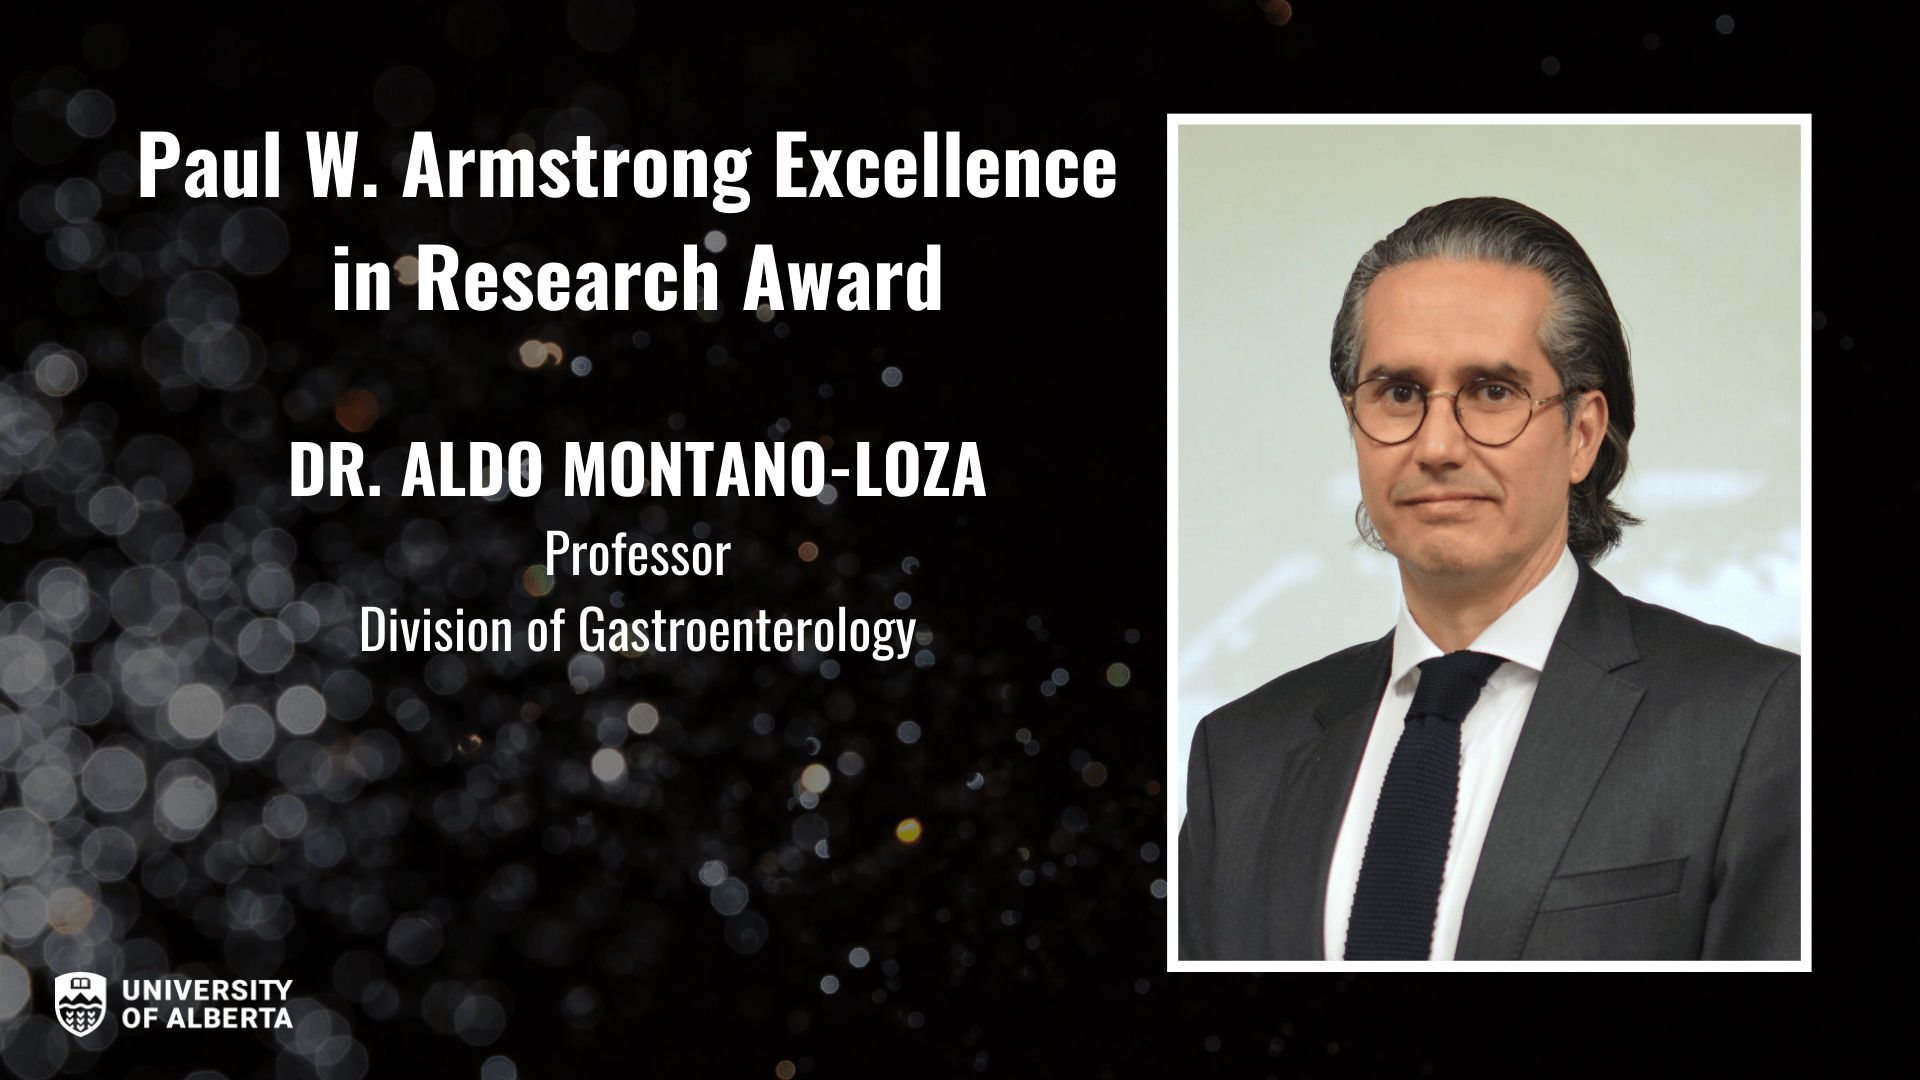 Portrait of Dr. Aldo Montano-Loza